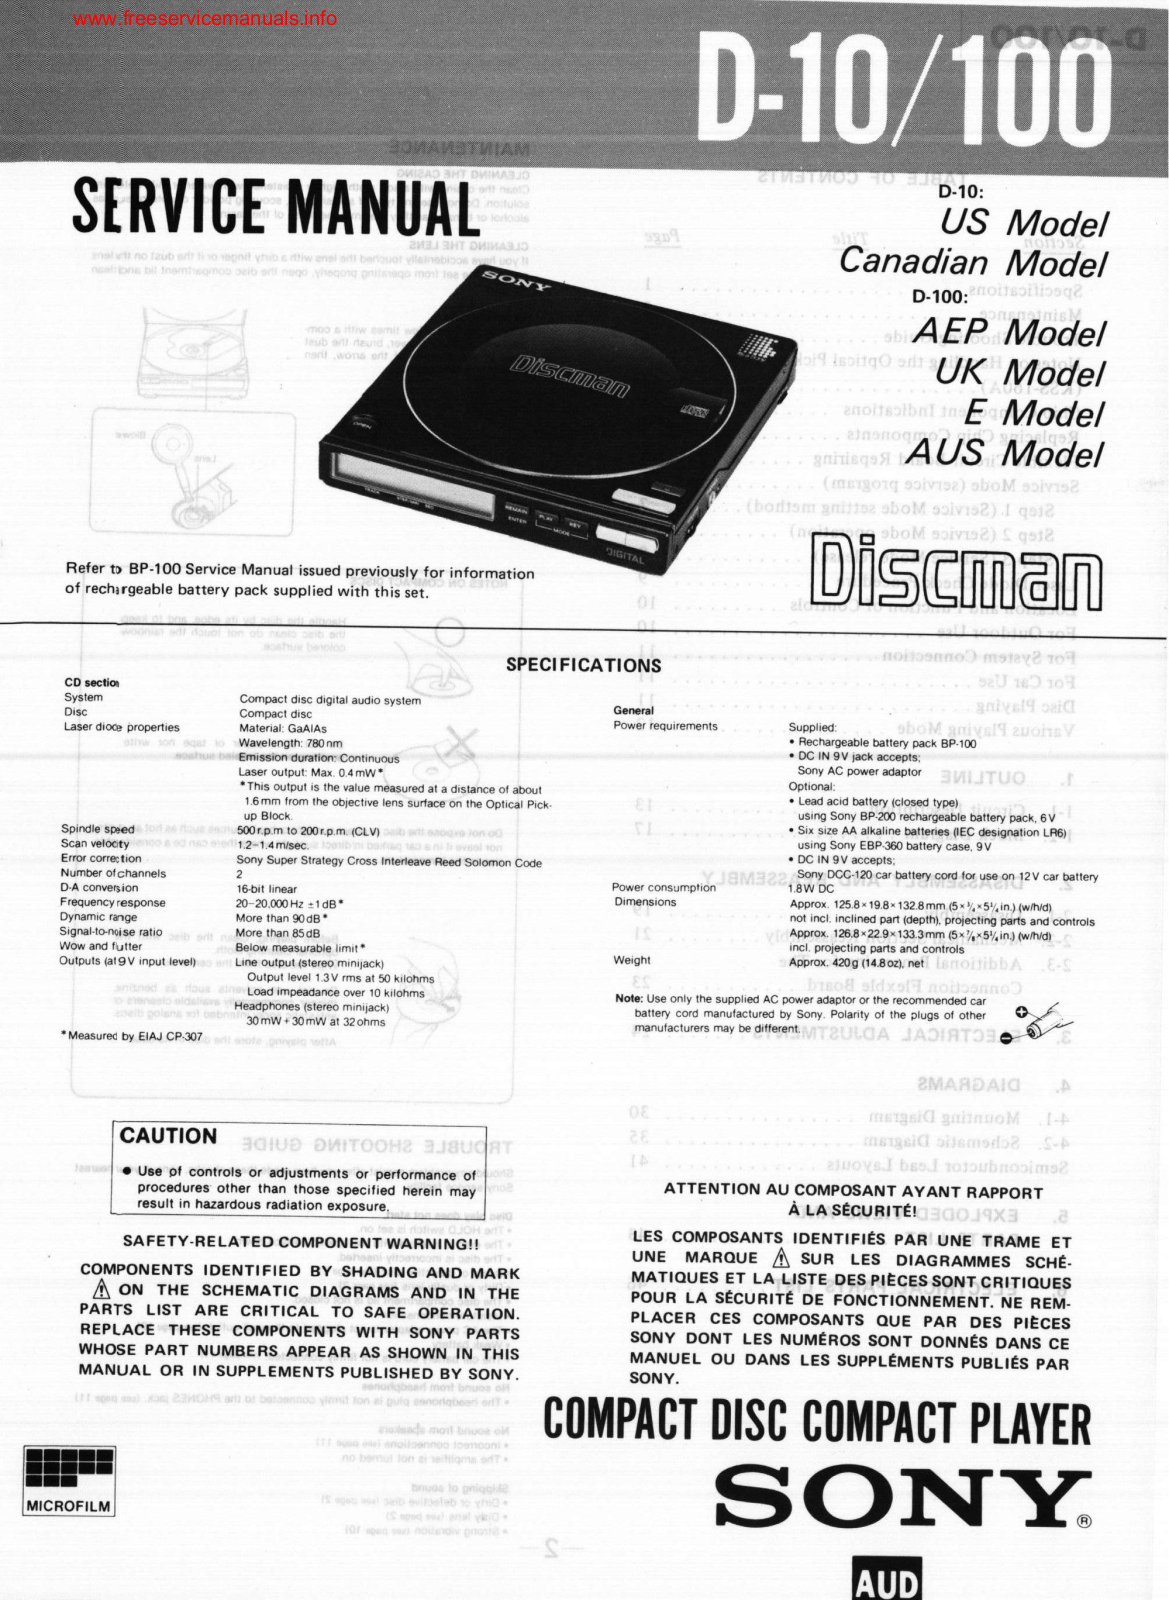 Sony d-100, d-10 Service Manual